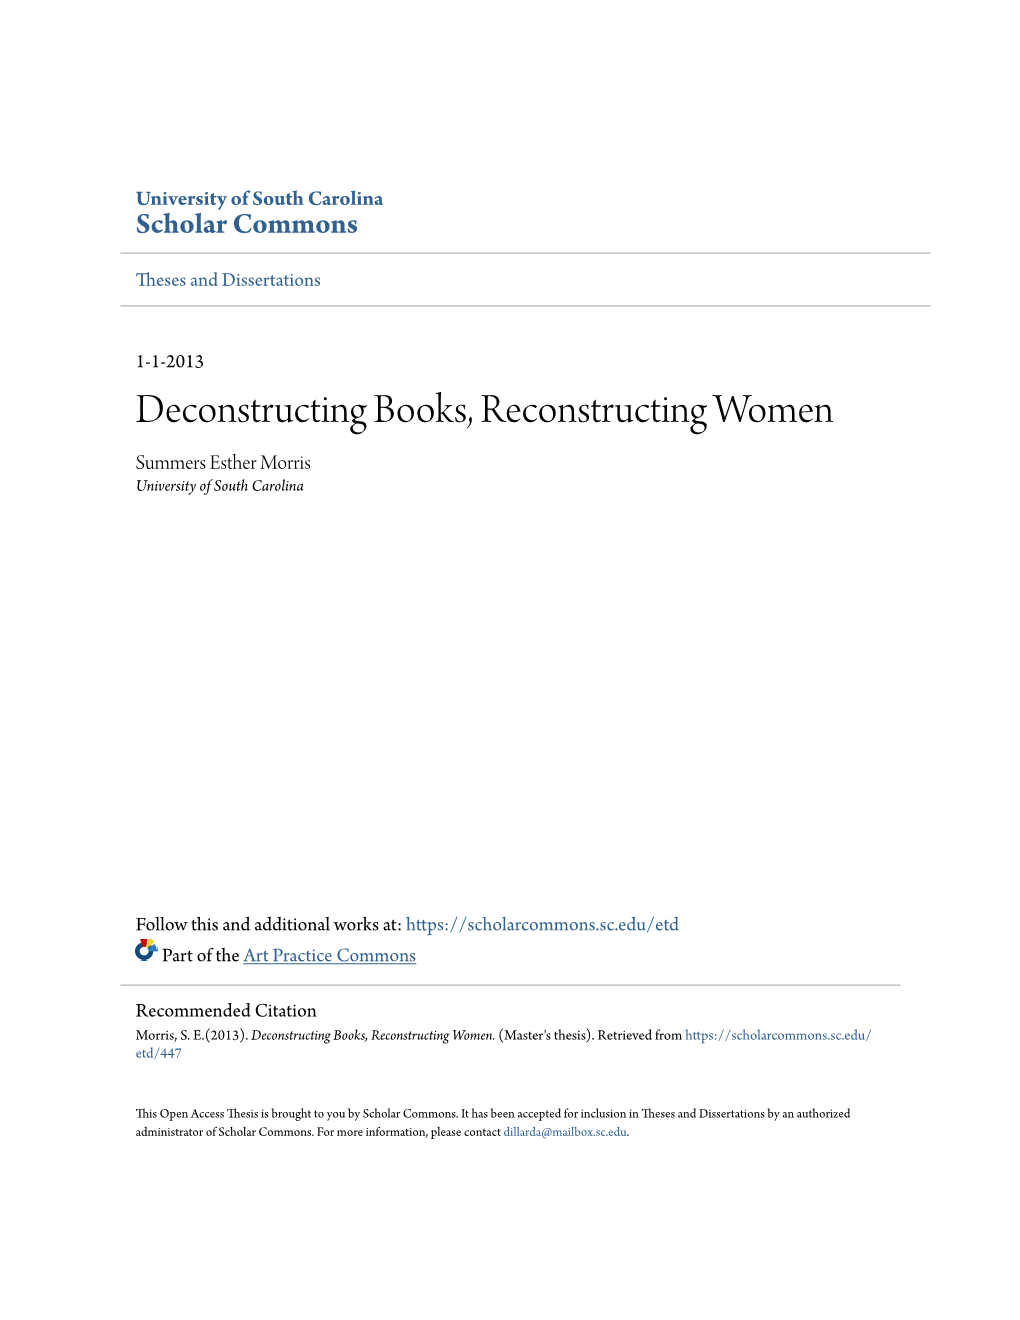 Deconstructing Books, Reconstructing Women Summers Esther Morris University of South Carolina